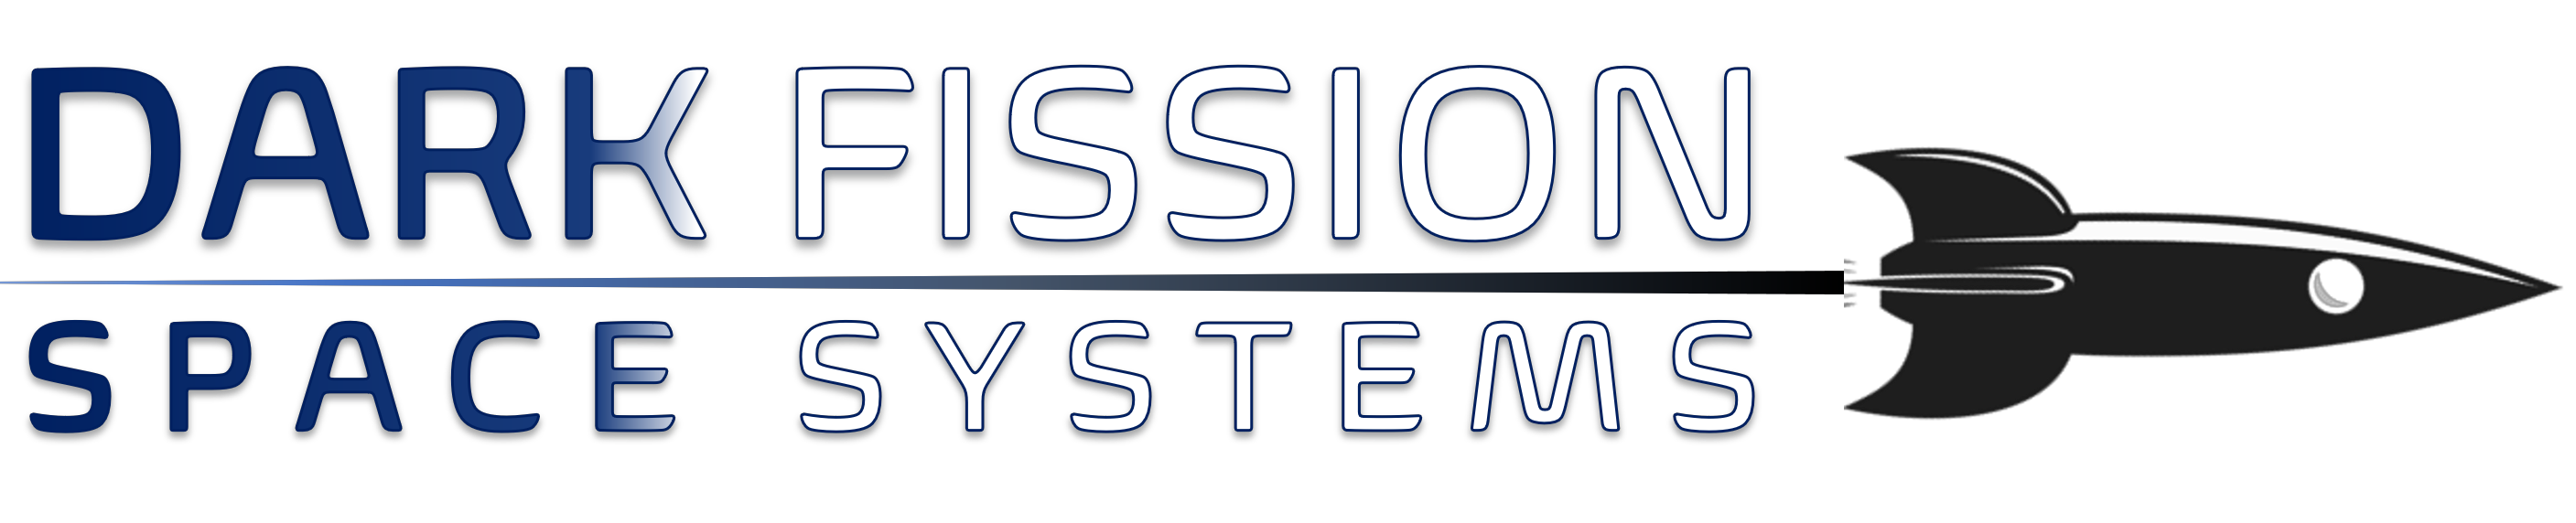 Dark Fission Logo